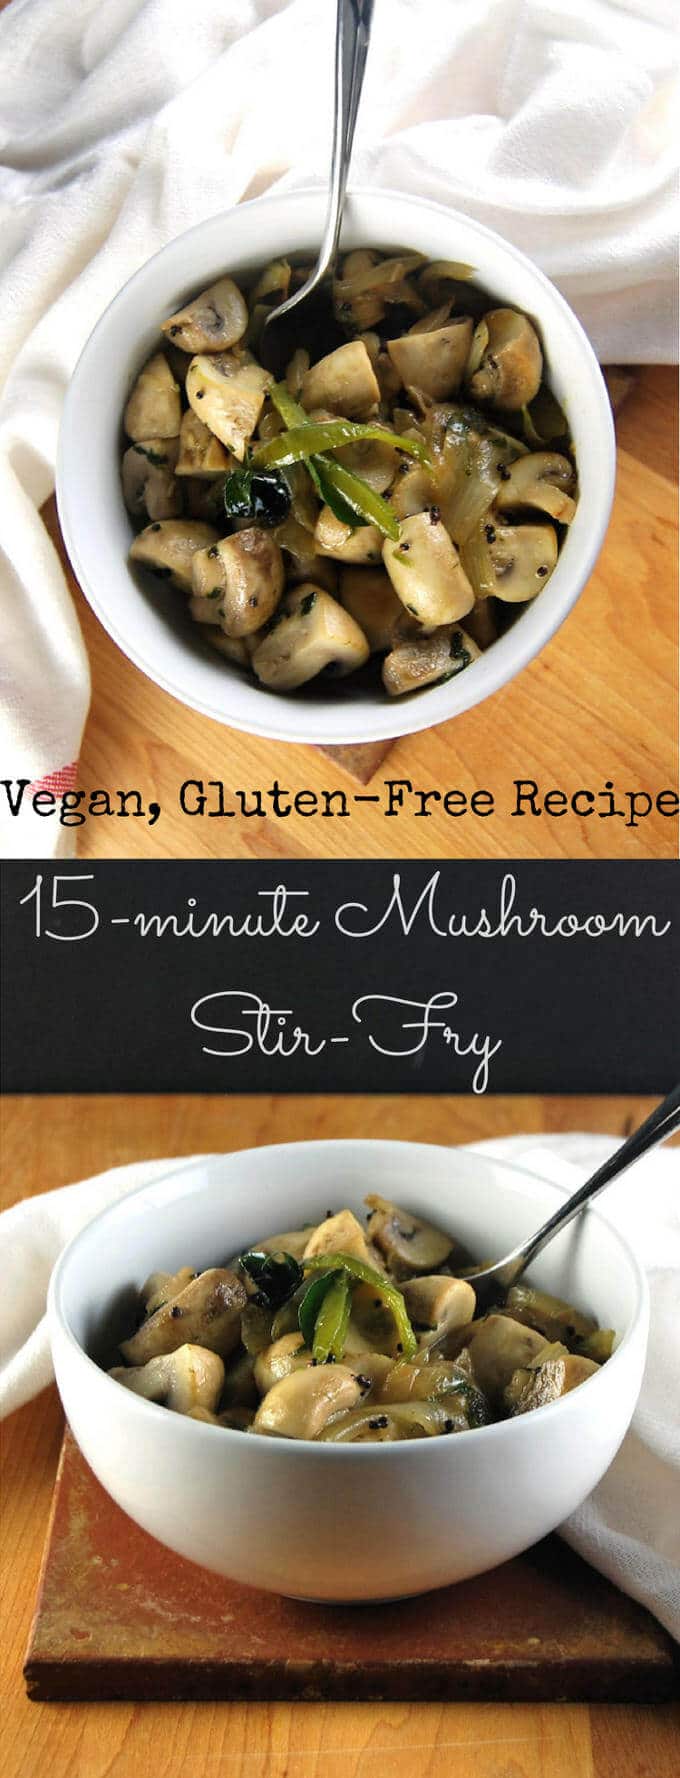 15-Minute Stir-Fried Mushrooms images with text that says "15 minute mushroom stir fry, vegan gluten-free recipe"